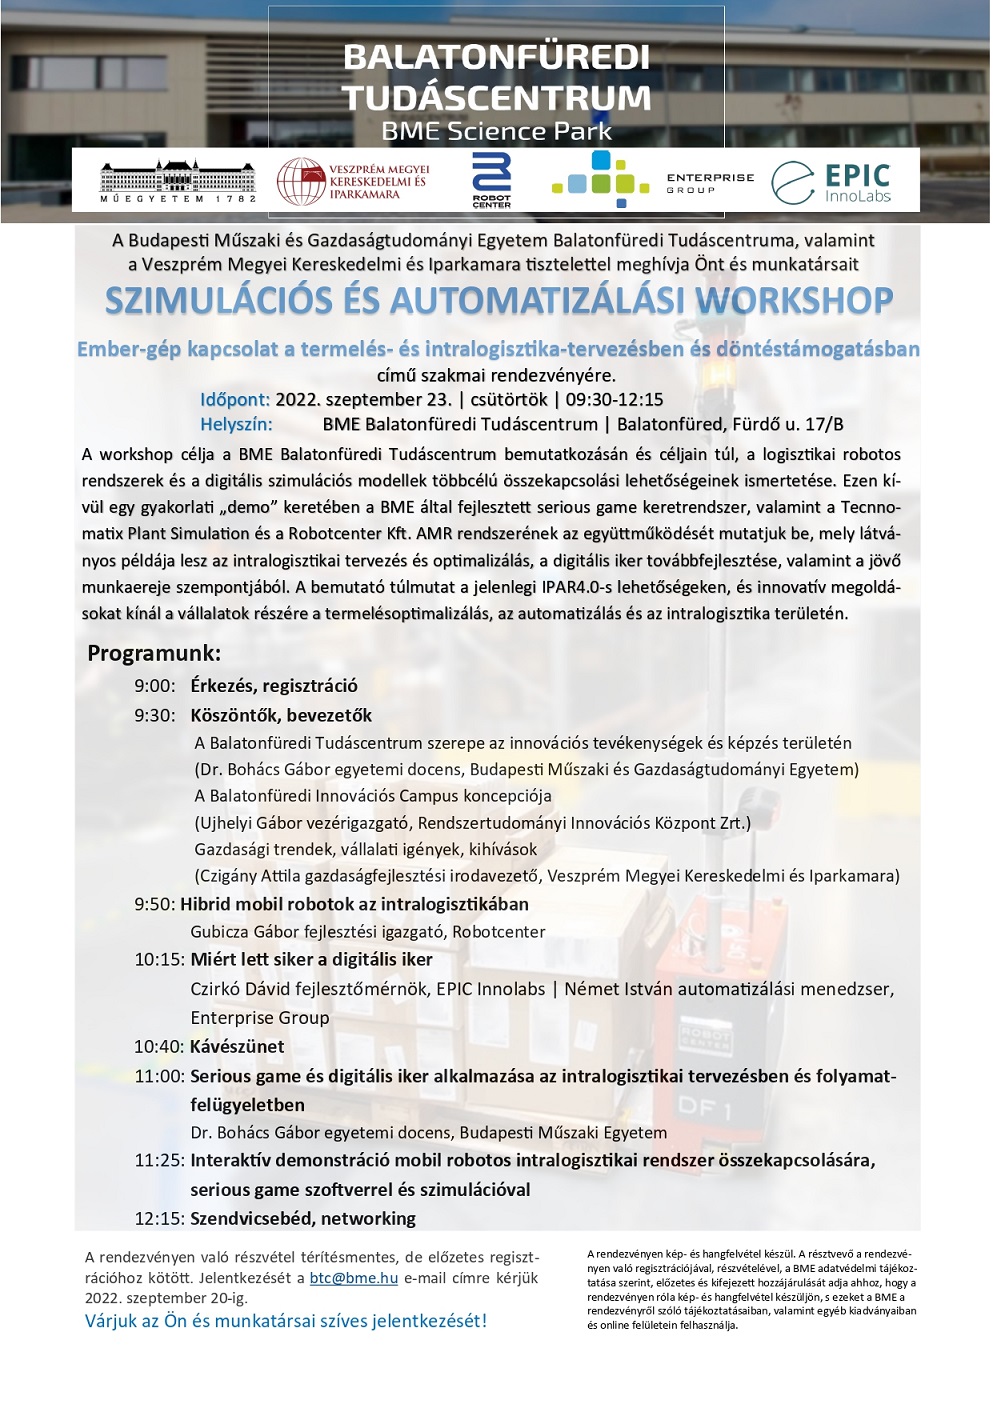 Meghivo szimulacios automatizalasi workshop kep